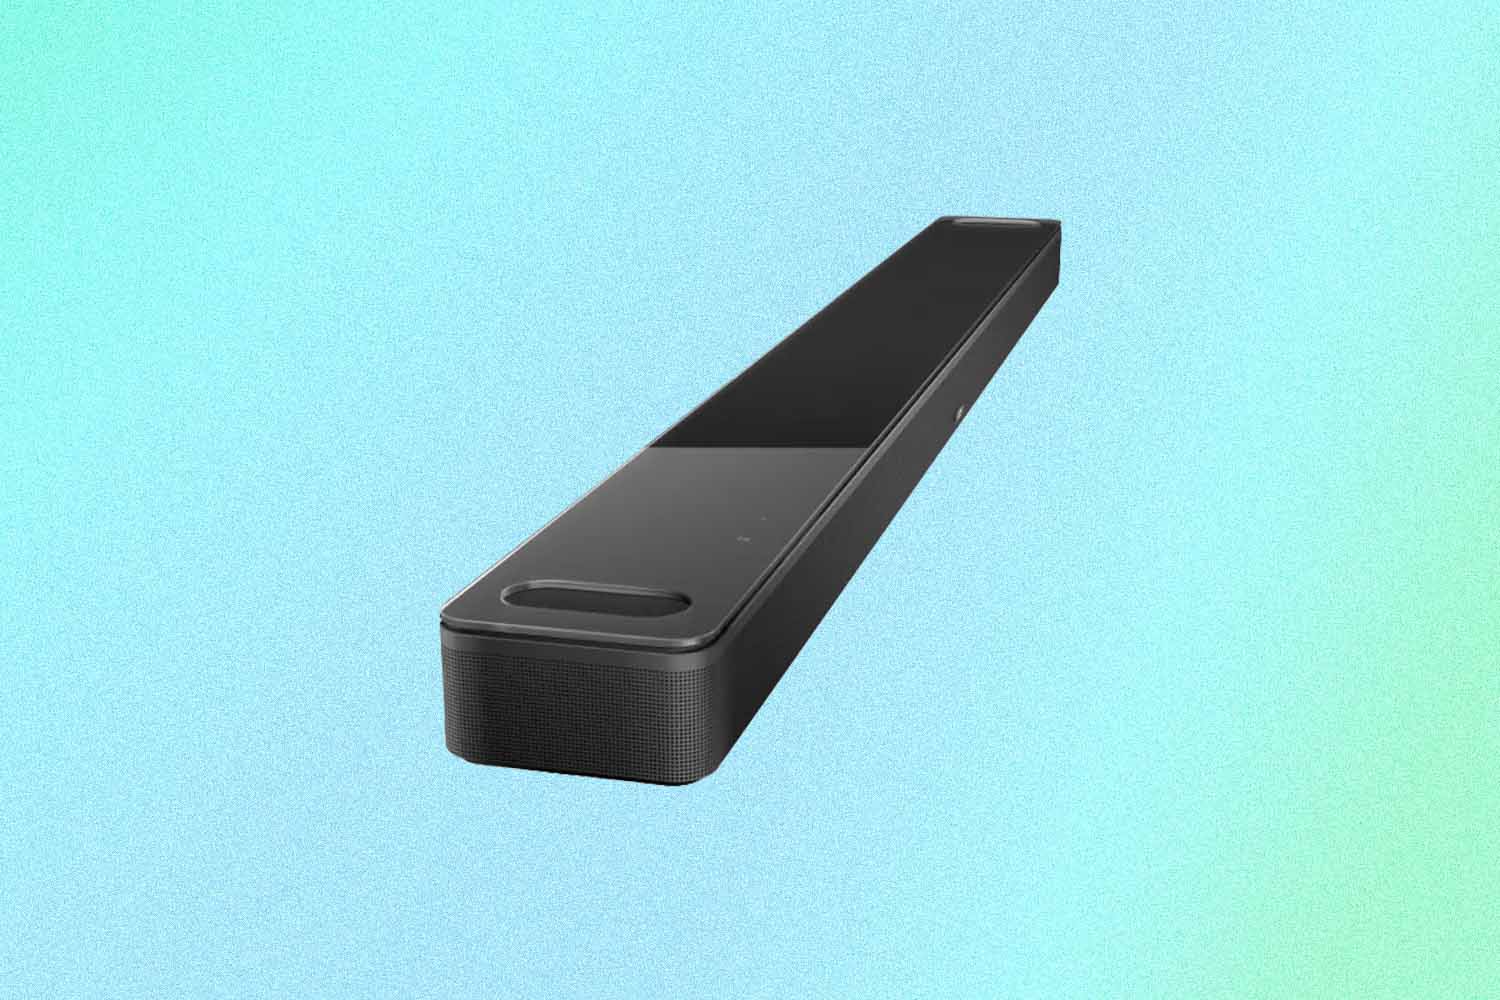 Bose Smart Ultra Soundbar